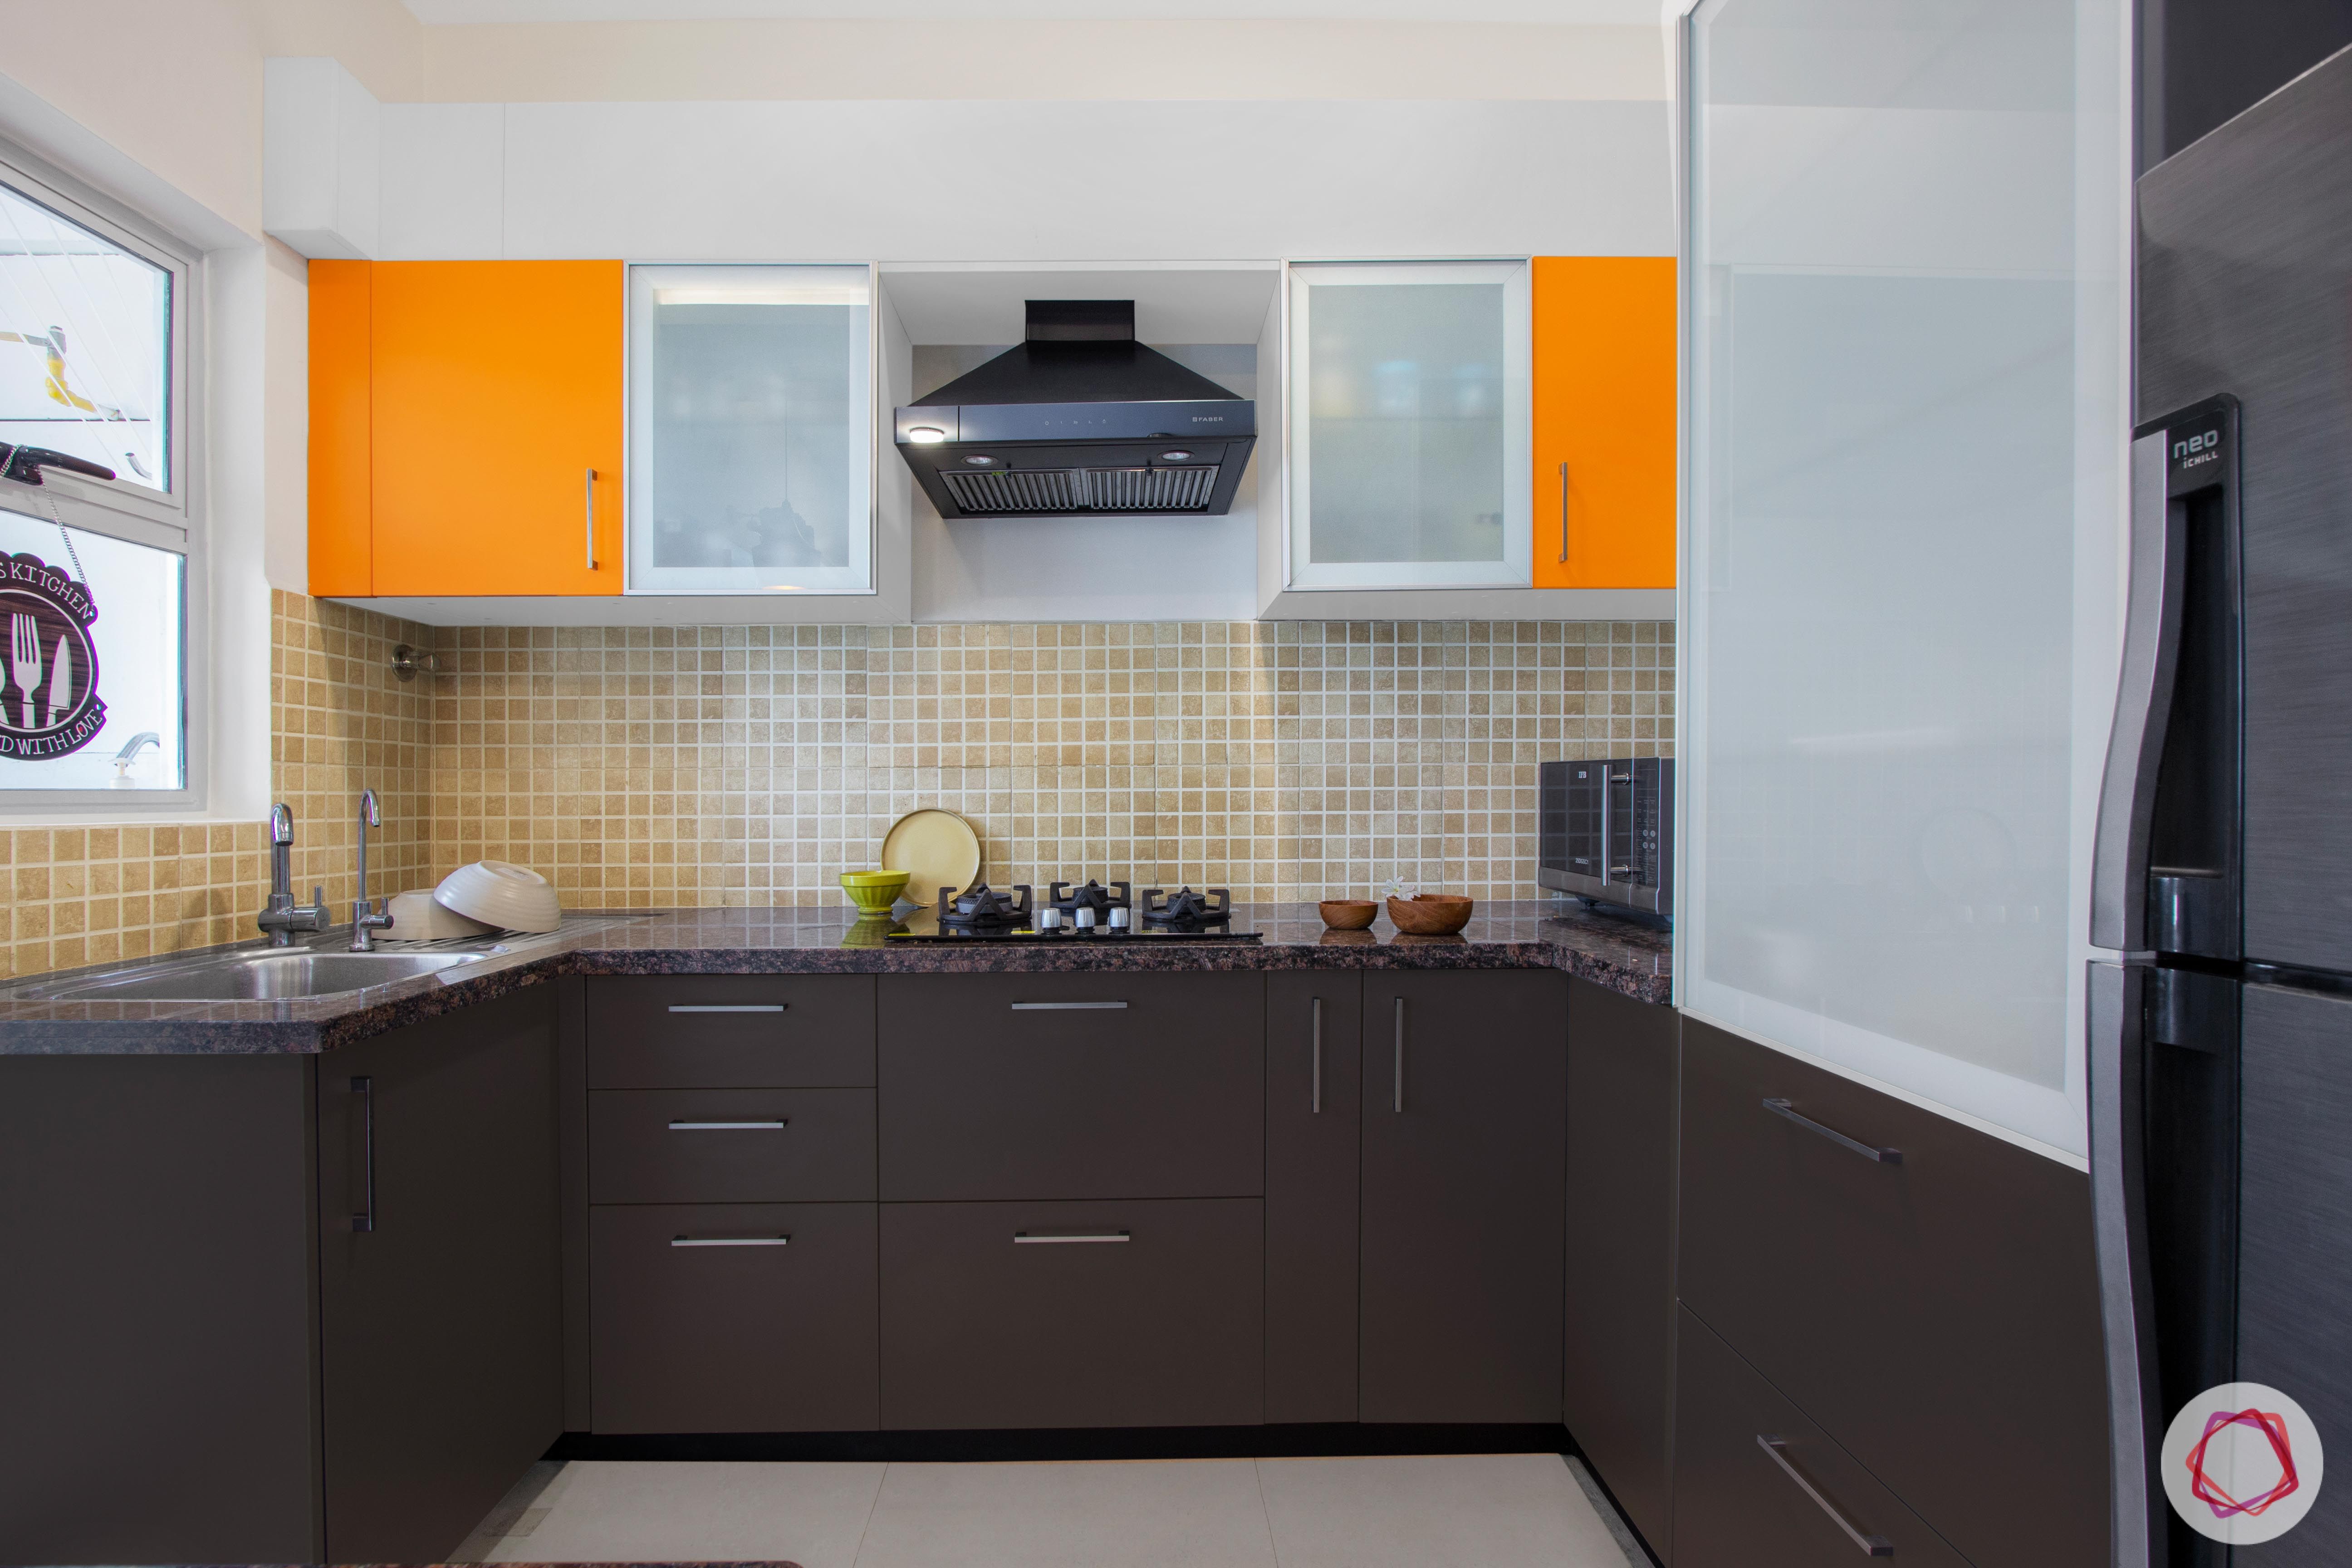 nitesh hyde park-orange cabinets-brown cabinets